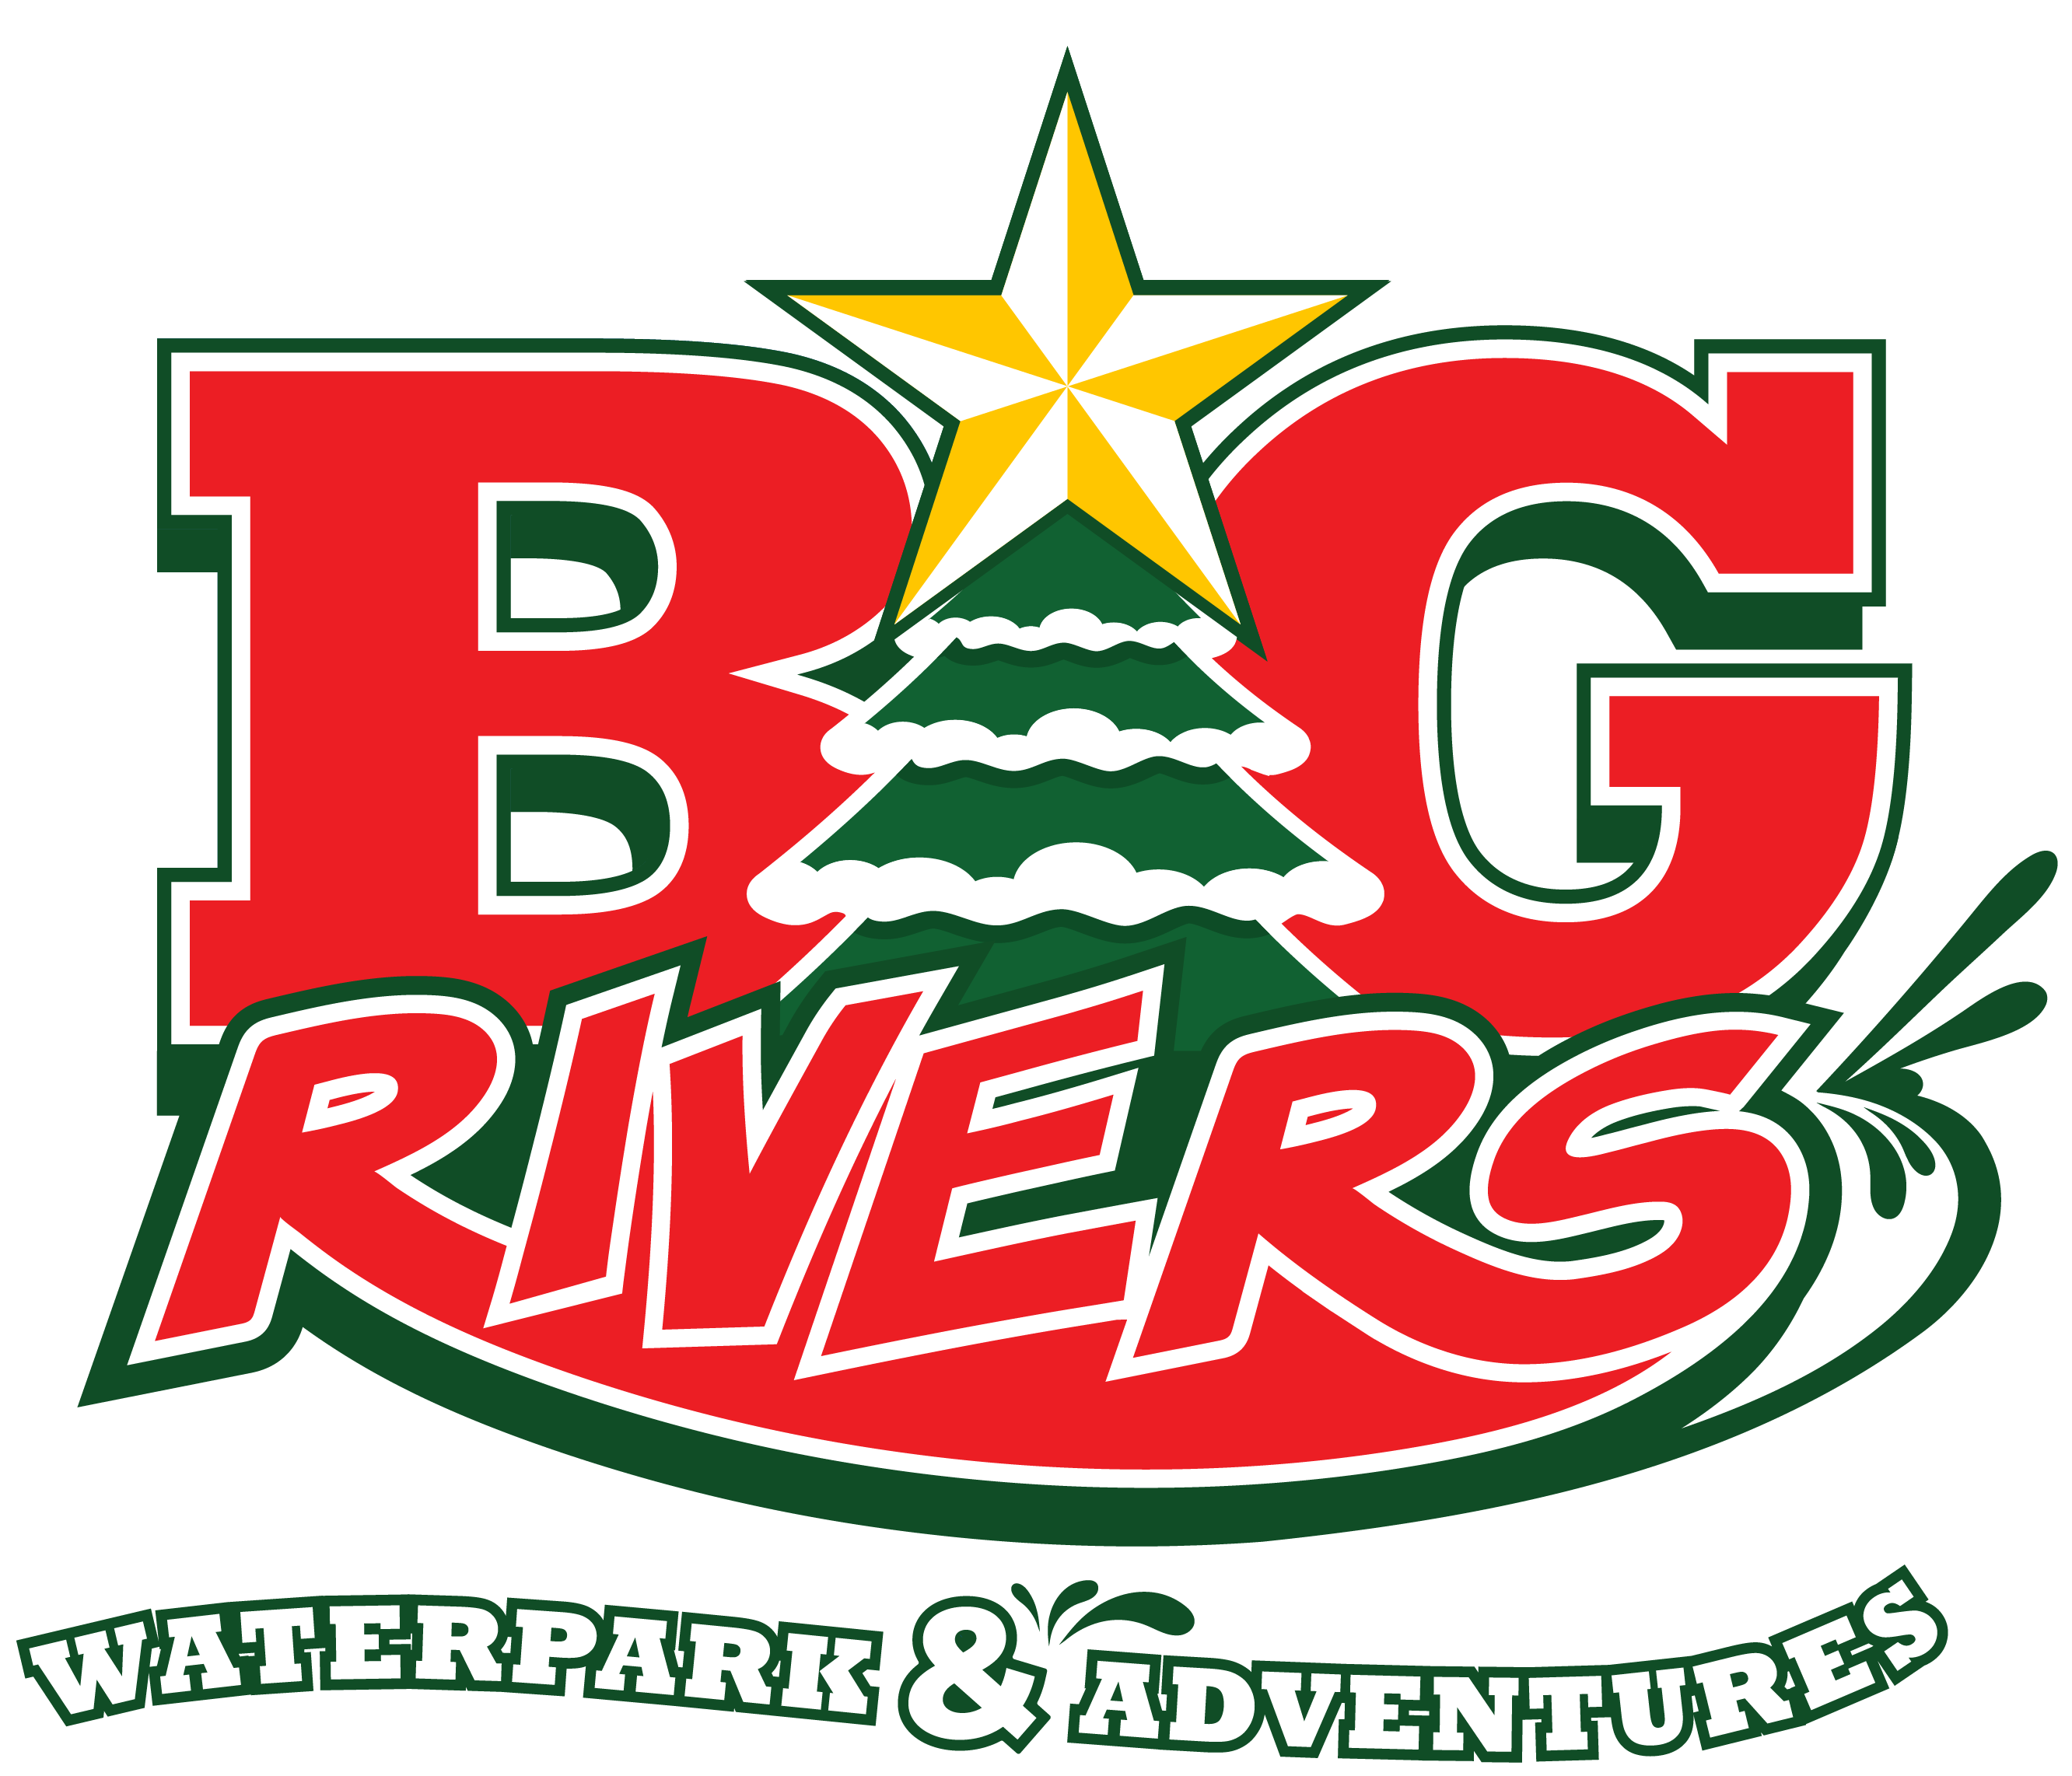 Big Rivers Water Park Logo